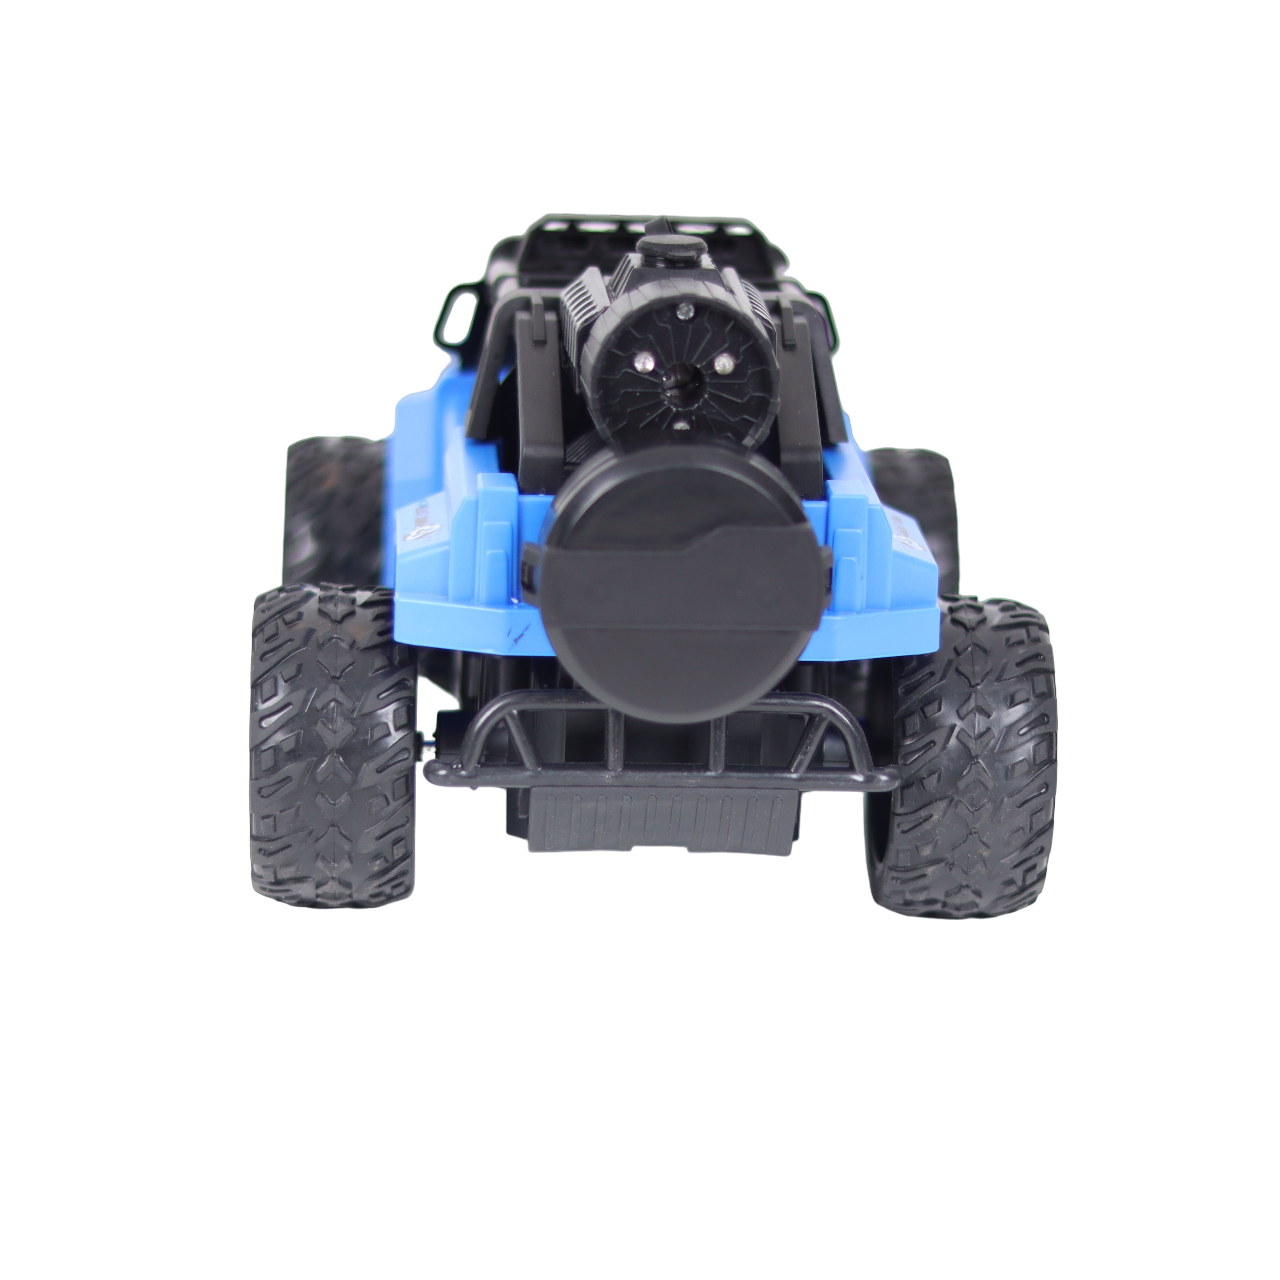 1:16 Scale Spray Remote Control Car - Ultimate Stunt and Smoke Machine